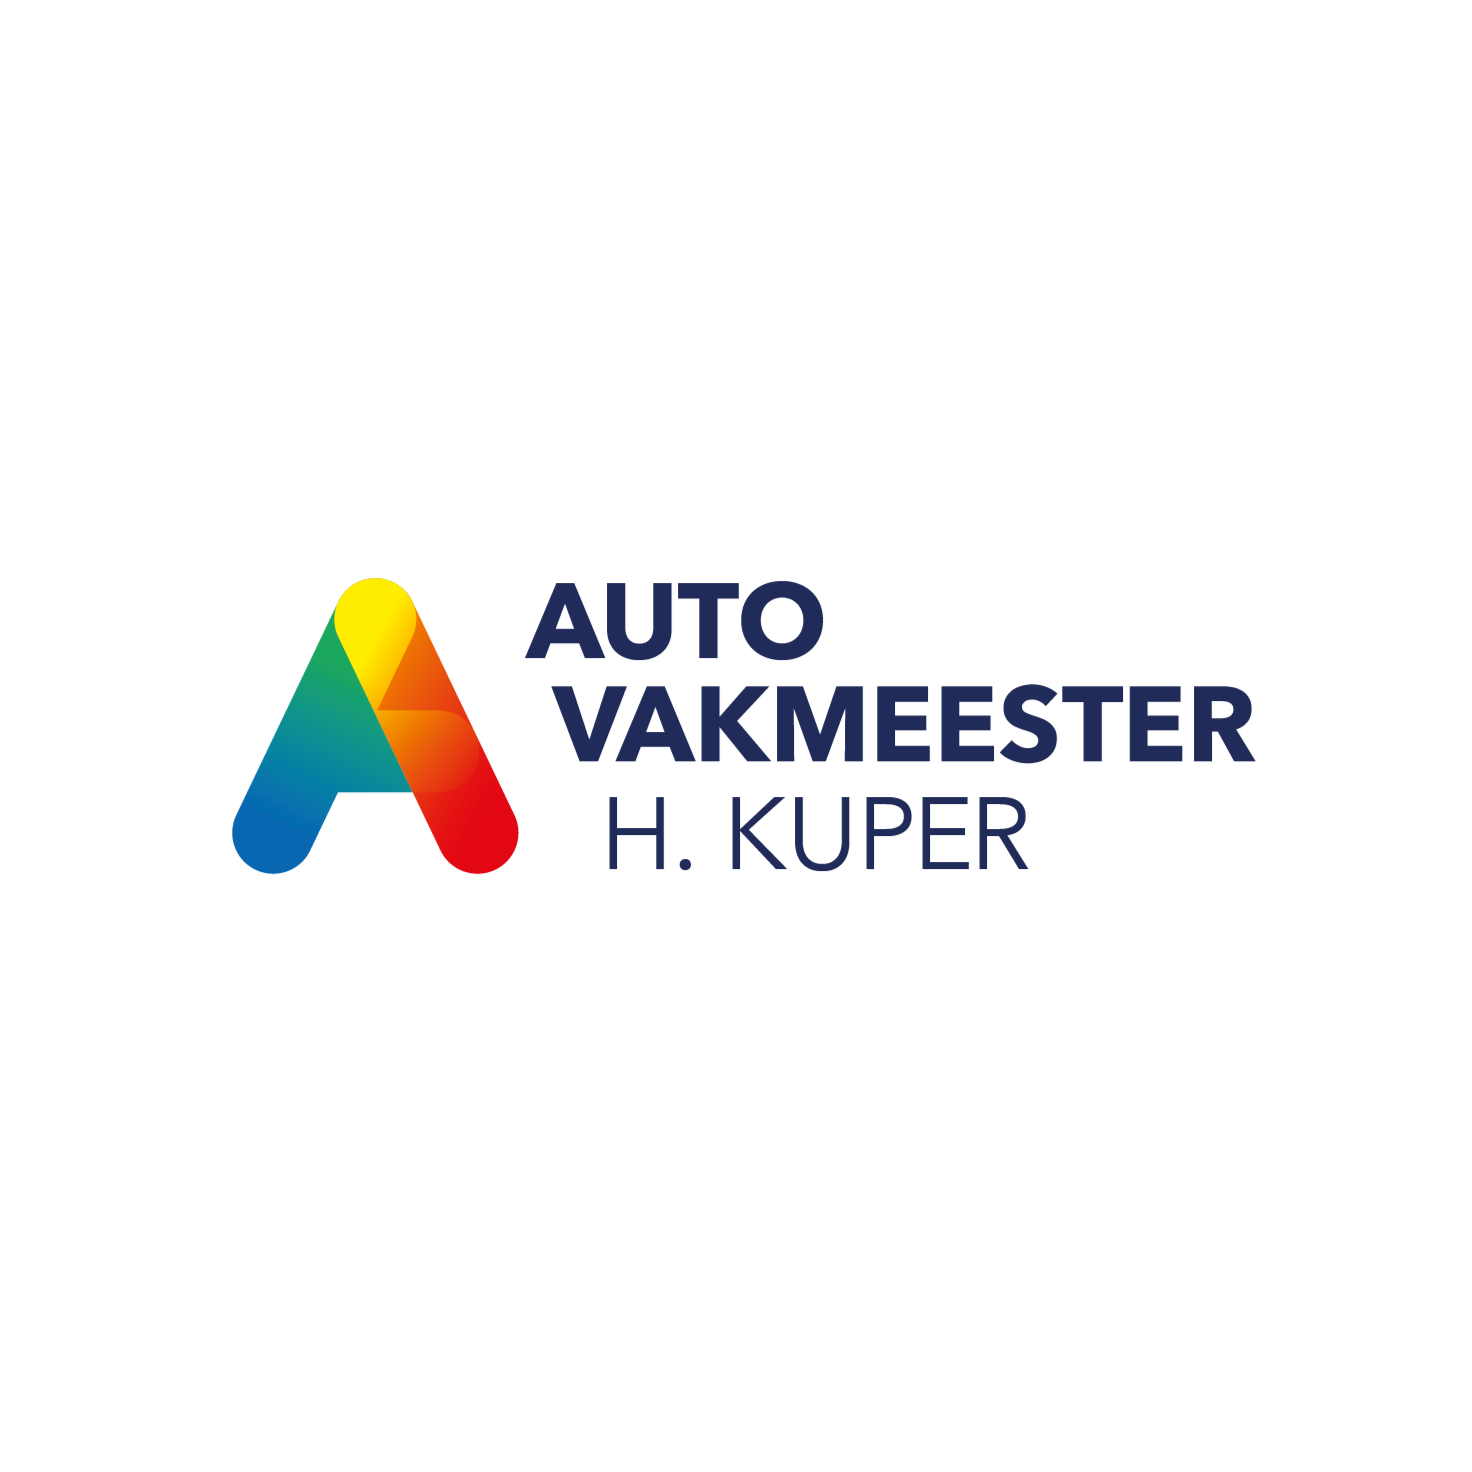 Autovakmeester H. Kuper Logo